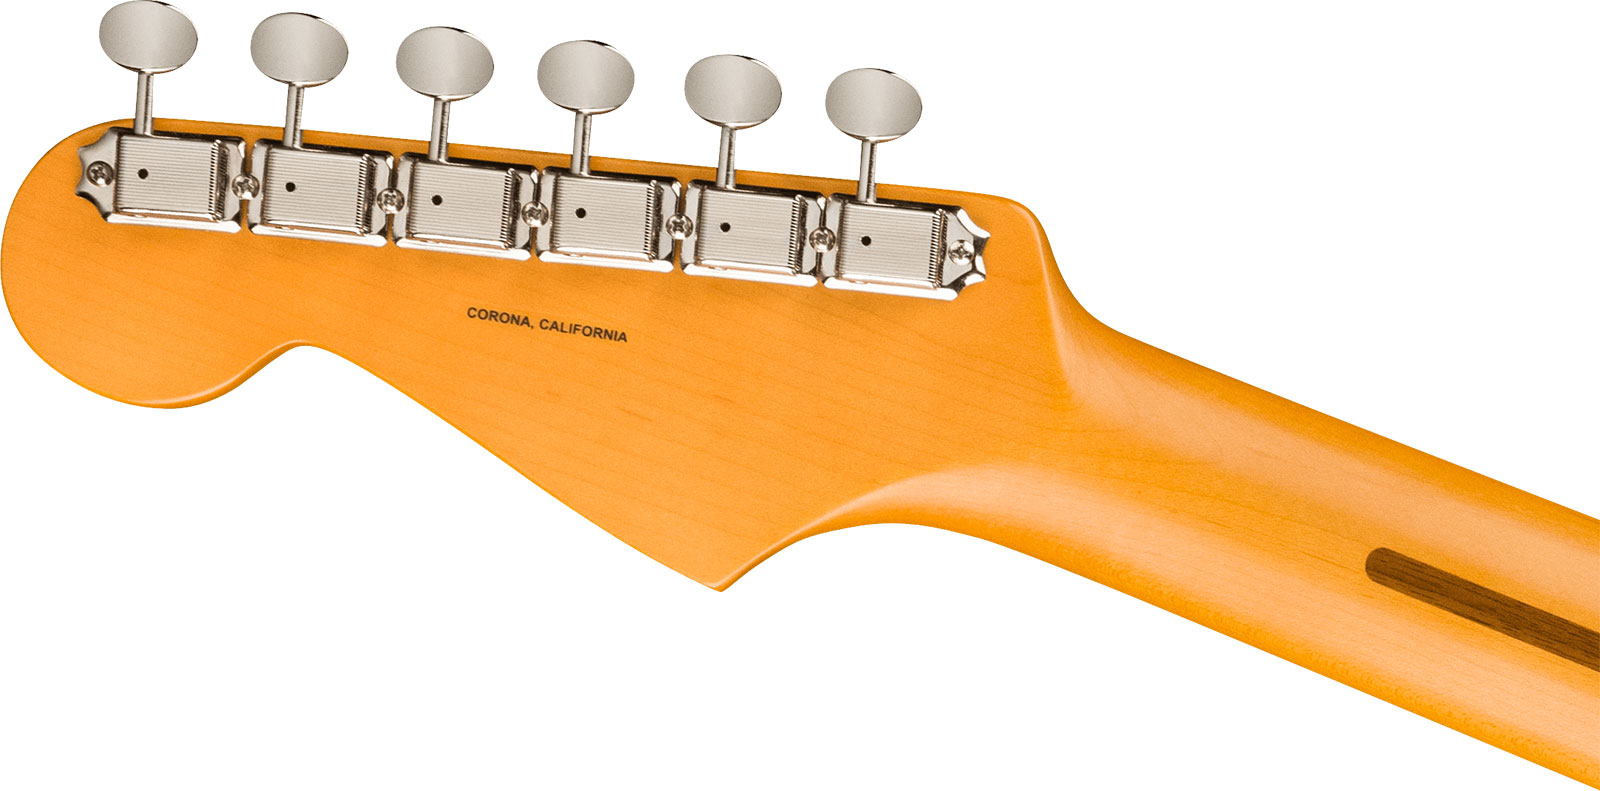 Fender Lincoln Brewster Strat Usa Signature 3s Dimarzio Trem Mn - Olympic Pearl - Guitare Électrique RÉtro Rock - Variation 3